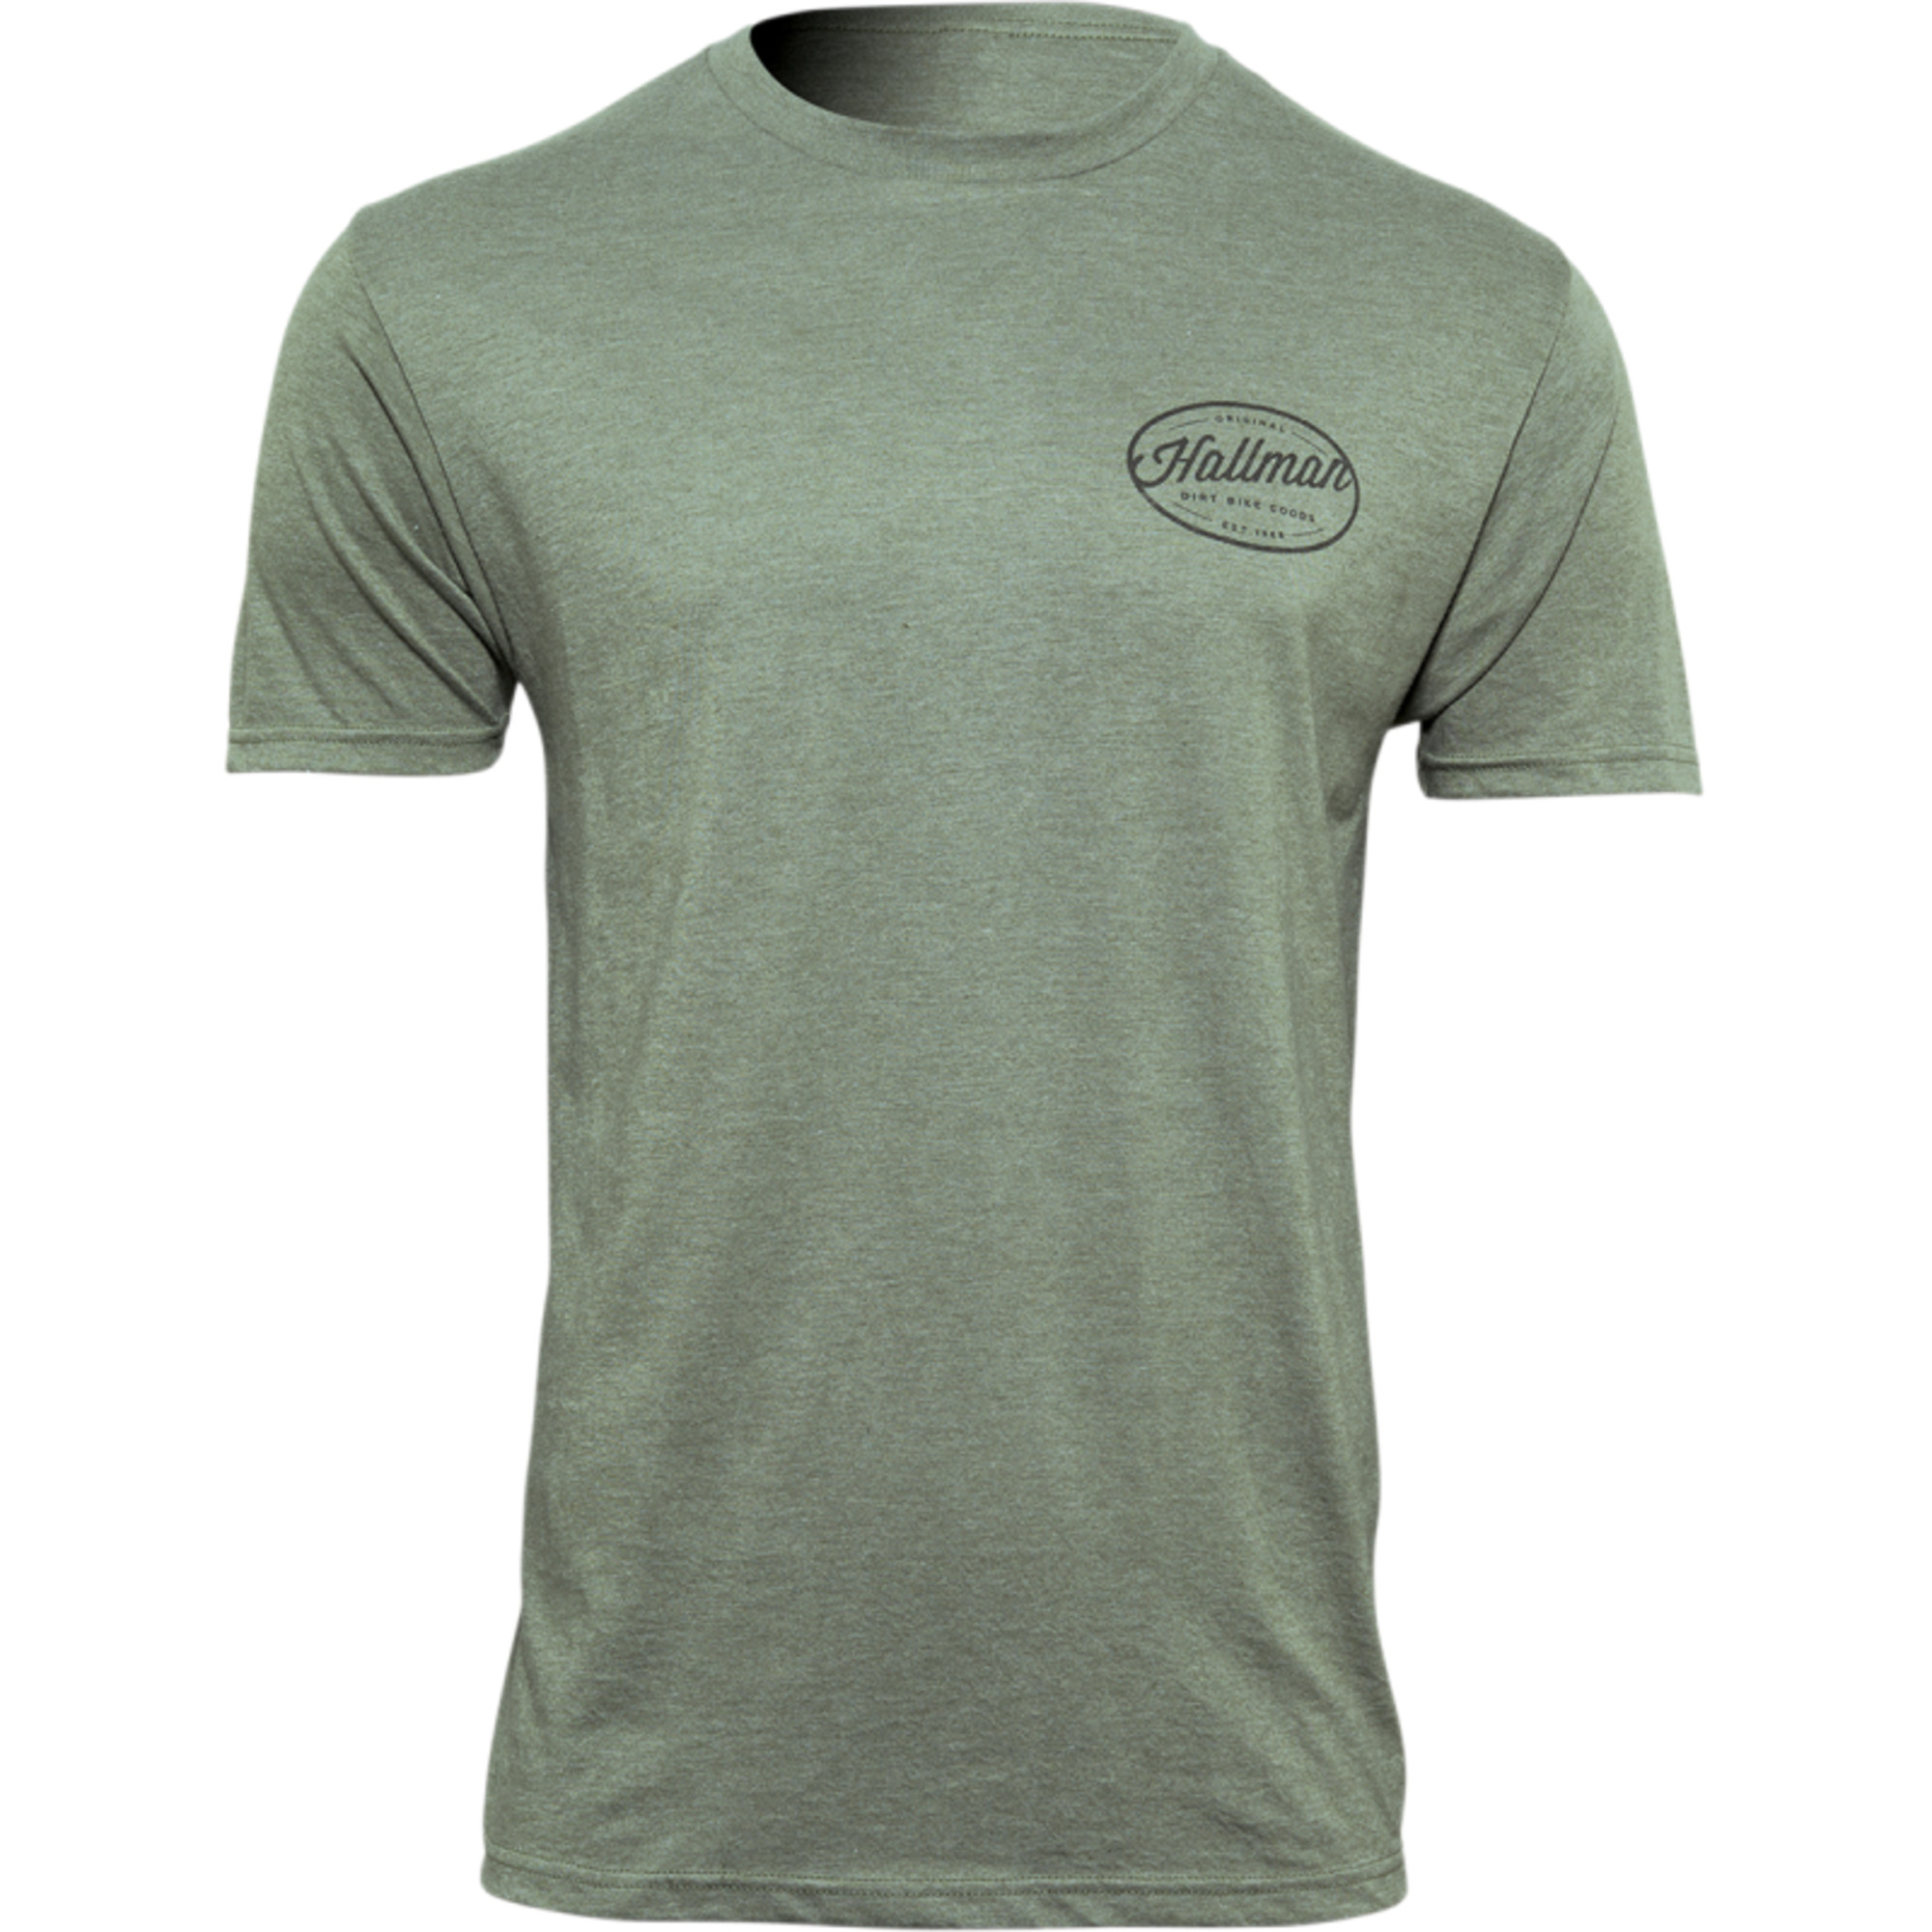 thor t-shirt shirts for men hallman goods